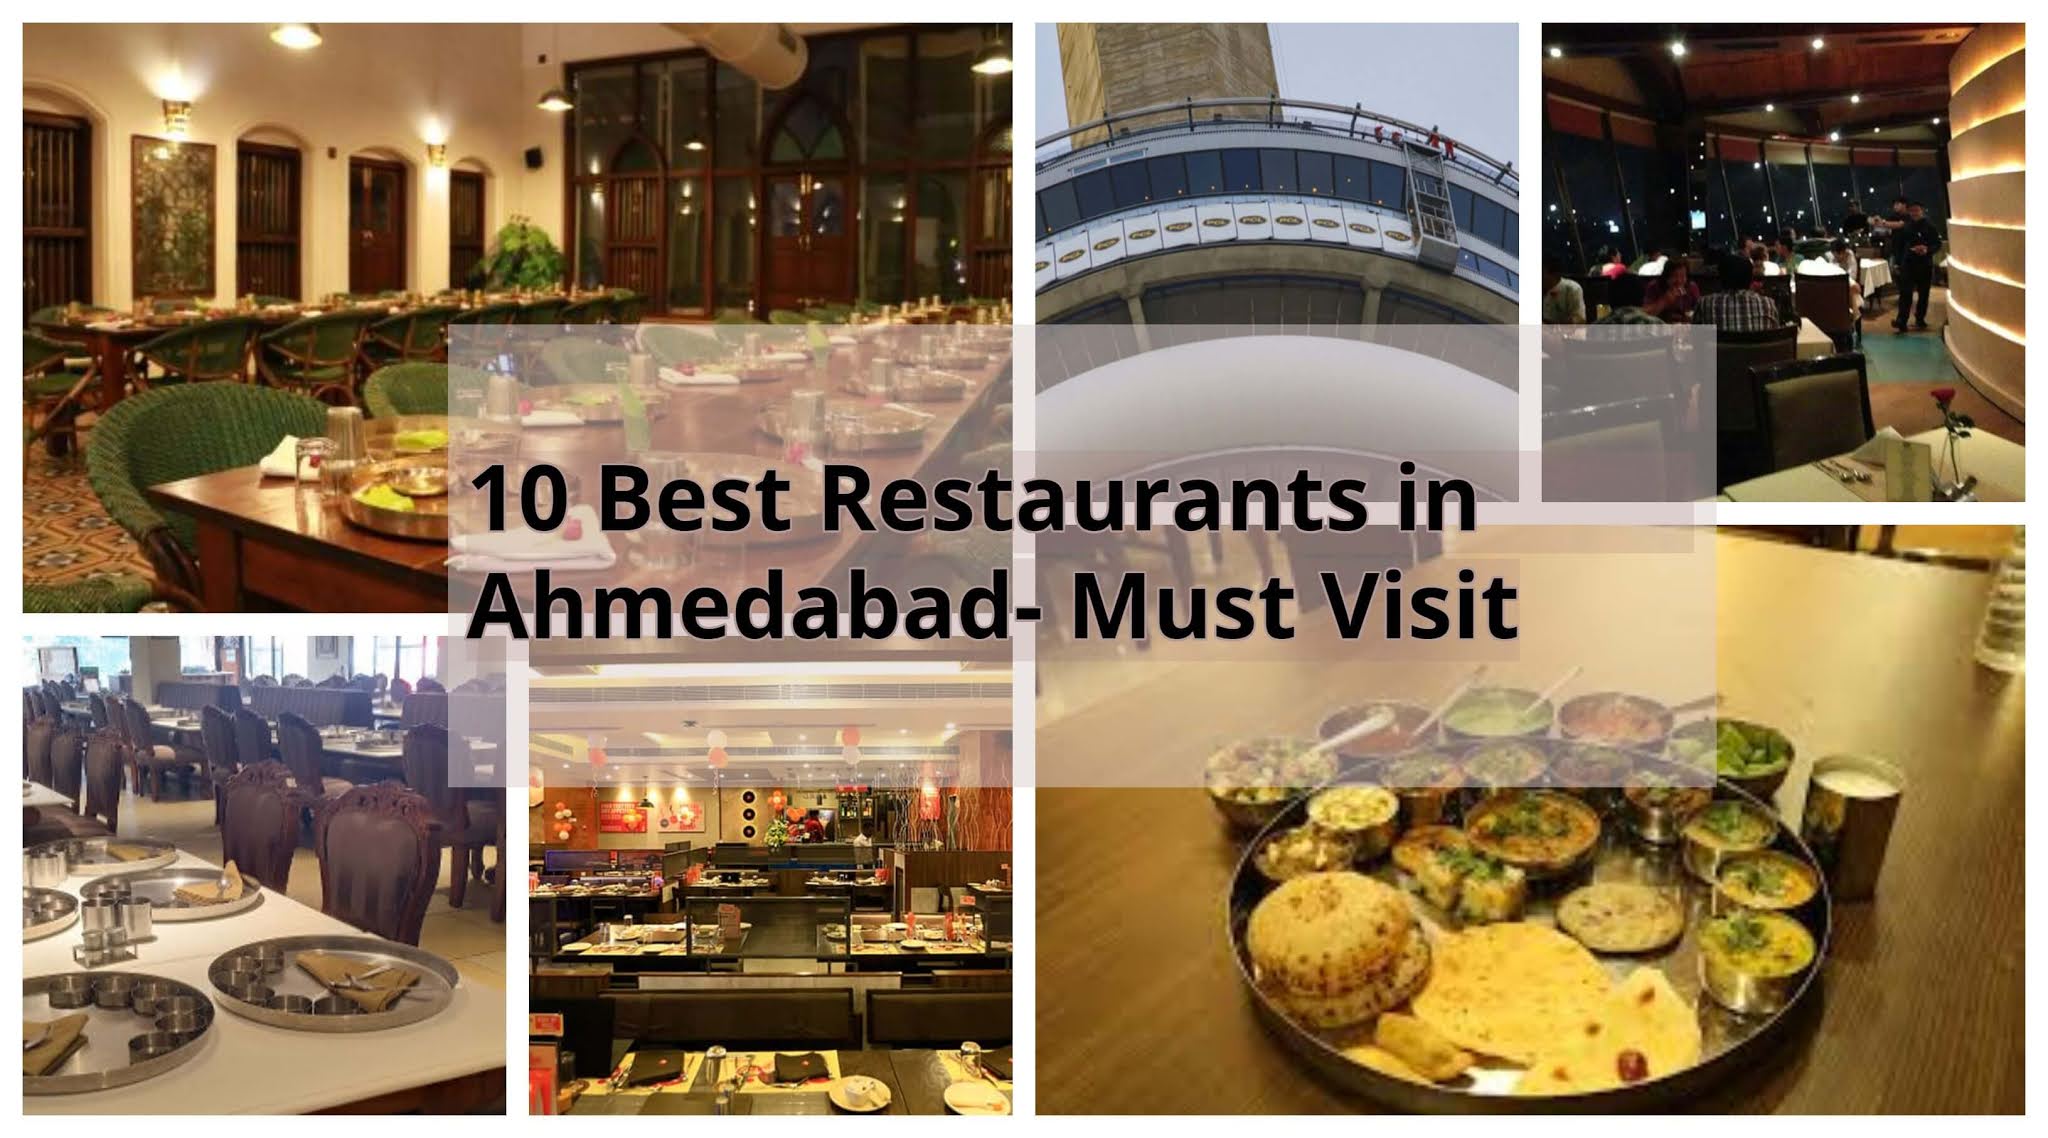 10 Best Restaurants in Ahmedabad- Must Visit - Amazing Tour India